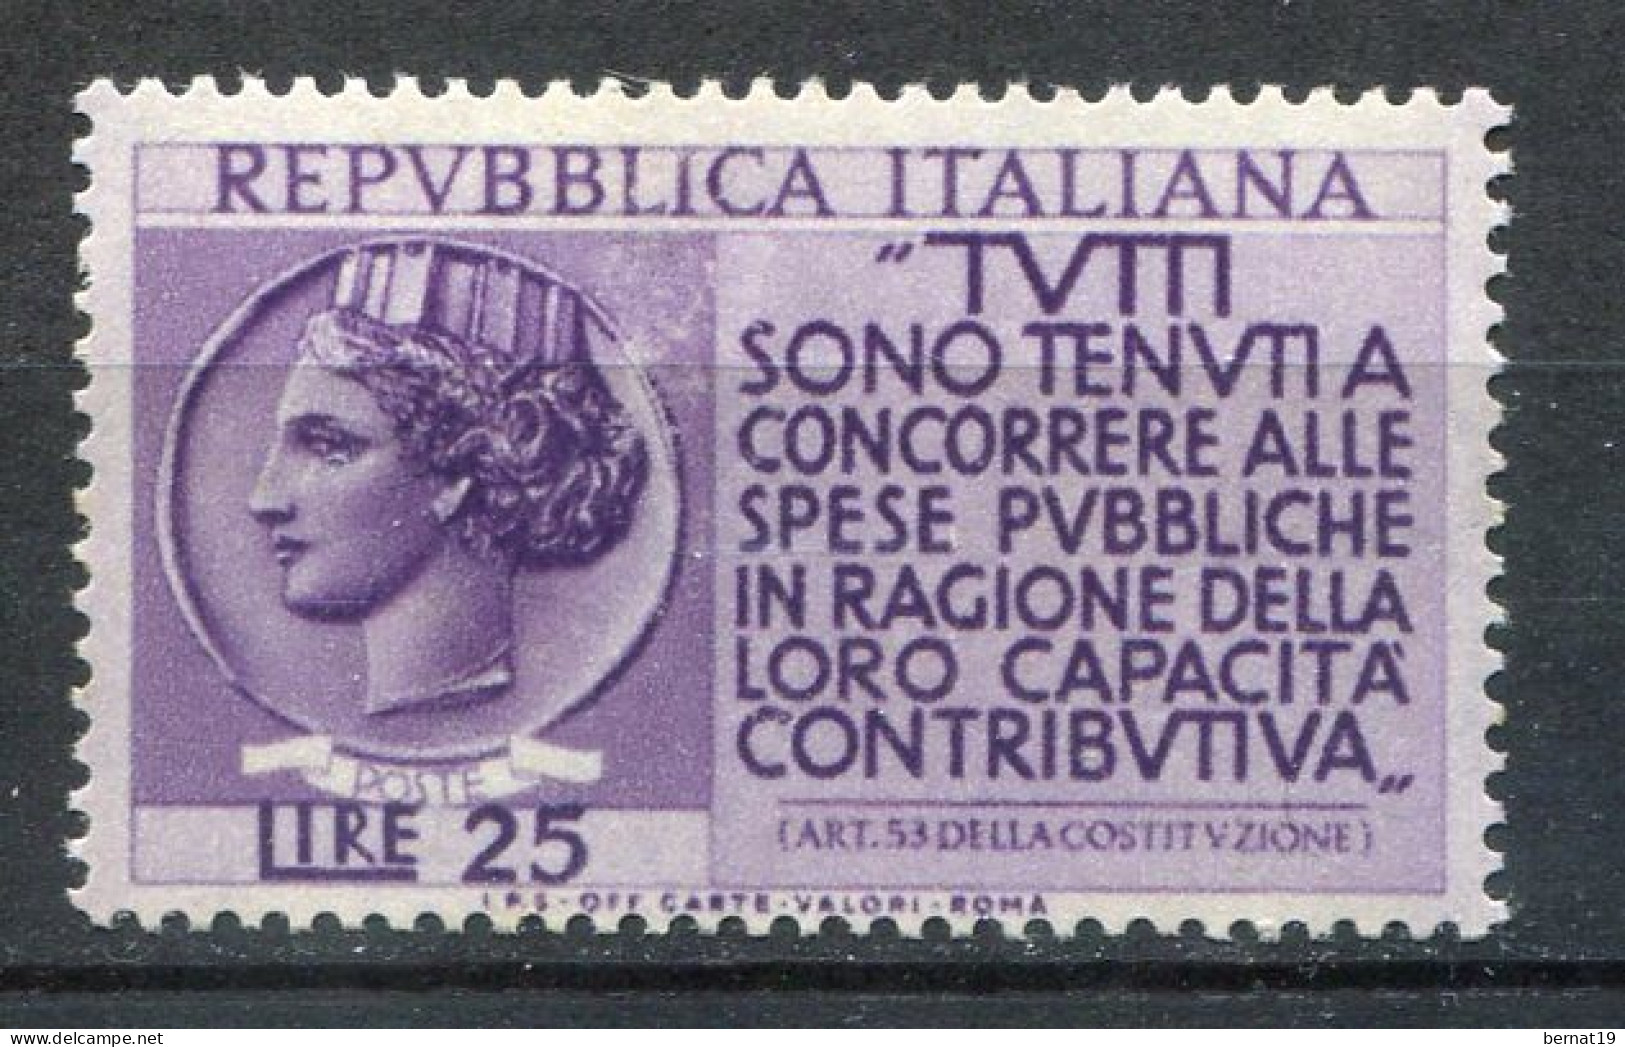 Italia 1953. Yvert 674 ** MNH - 1946-60: Mint/hinged